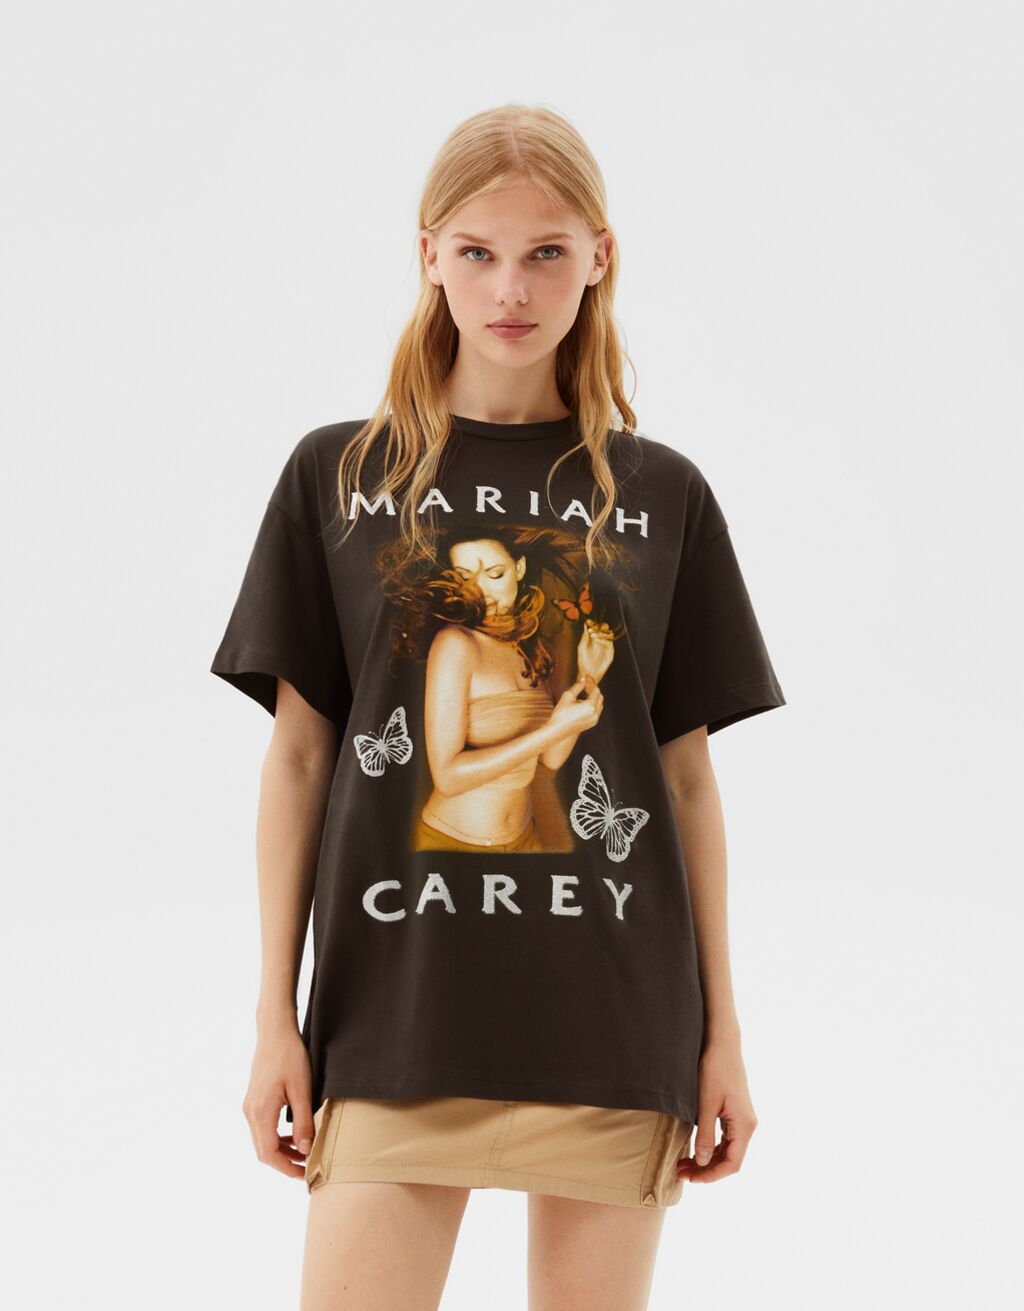 Mariah Carey short sleeve T-shirt